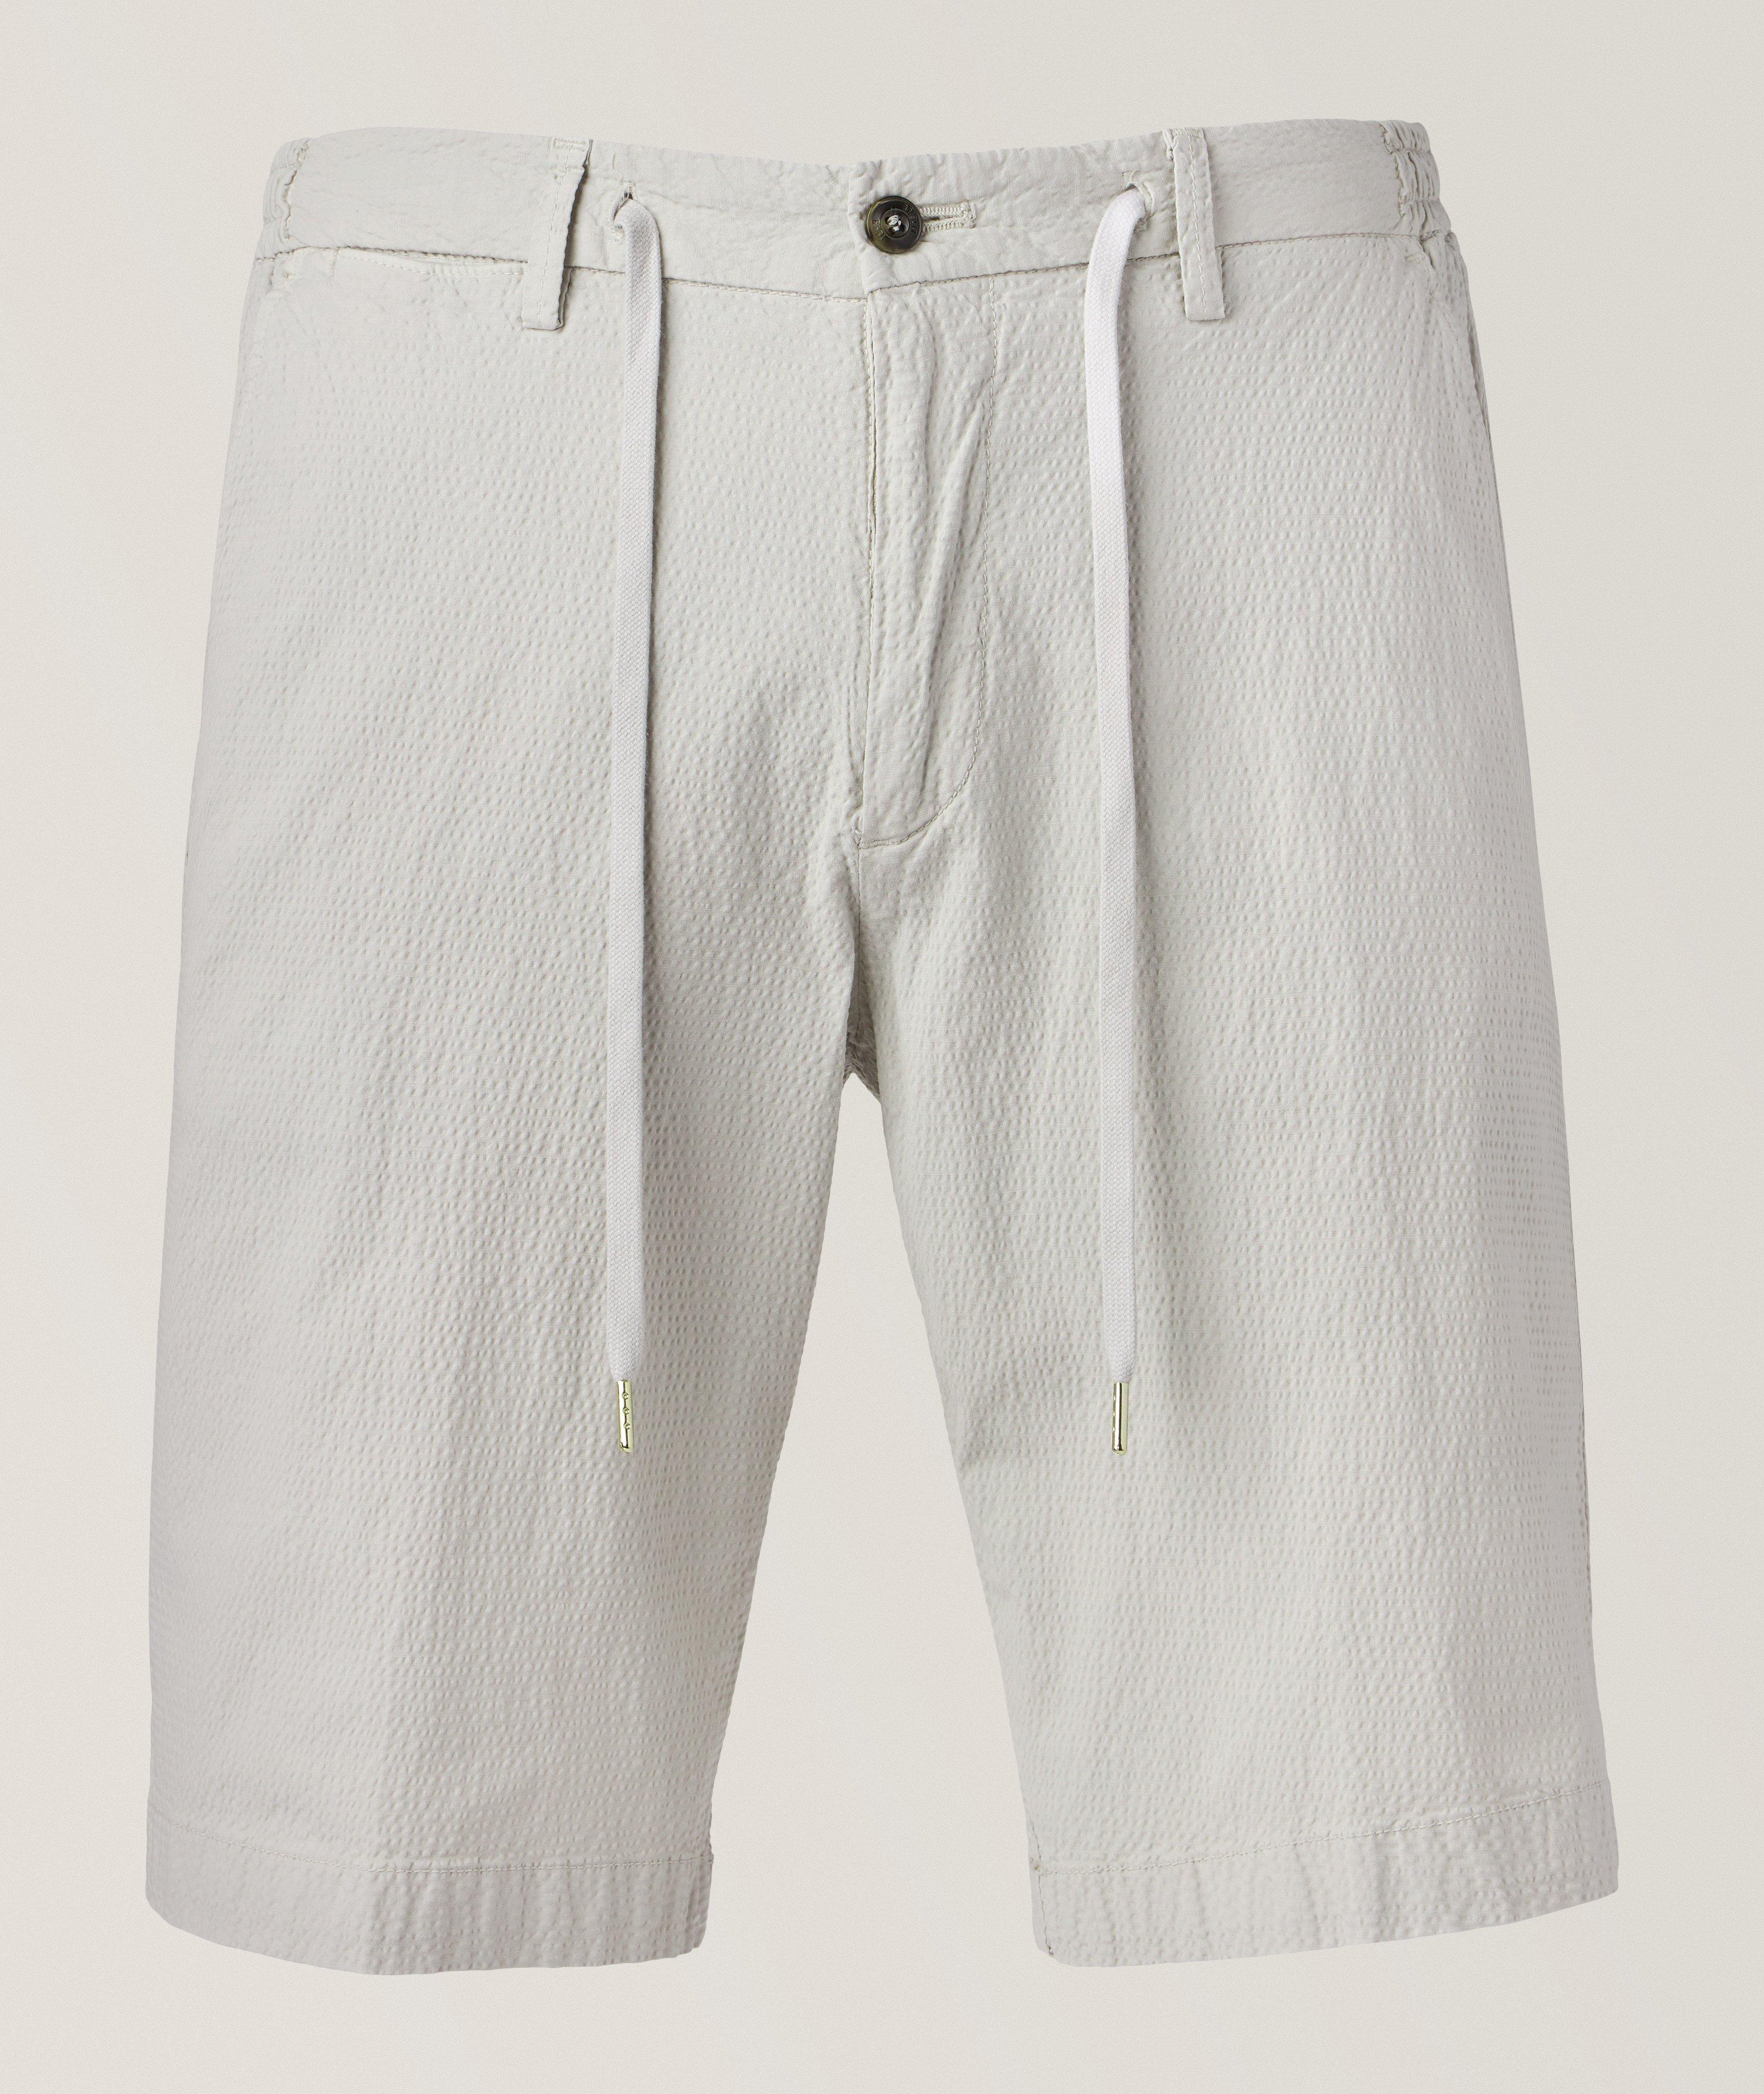 Textured Stretch-Cotton Bermuda Shorts image 0